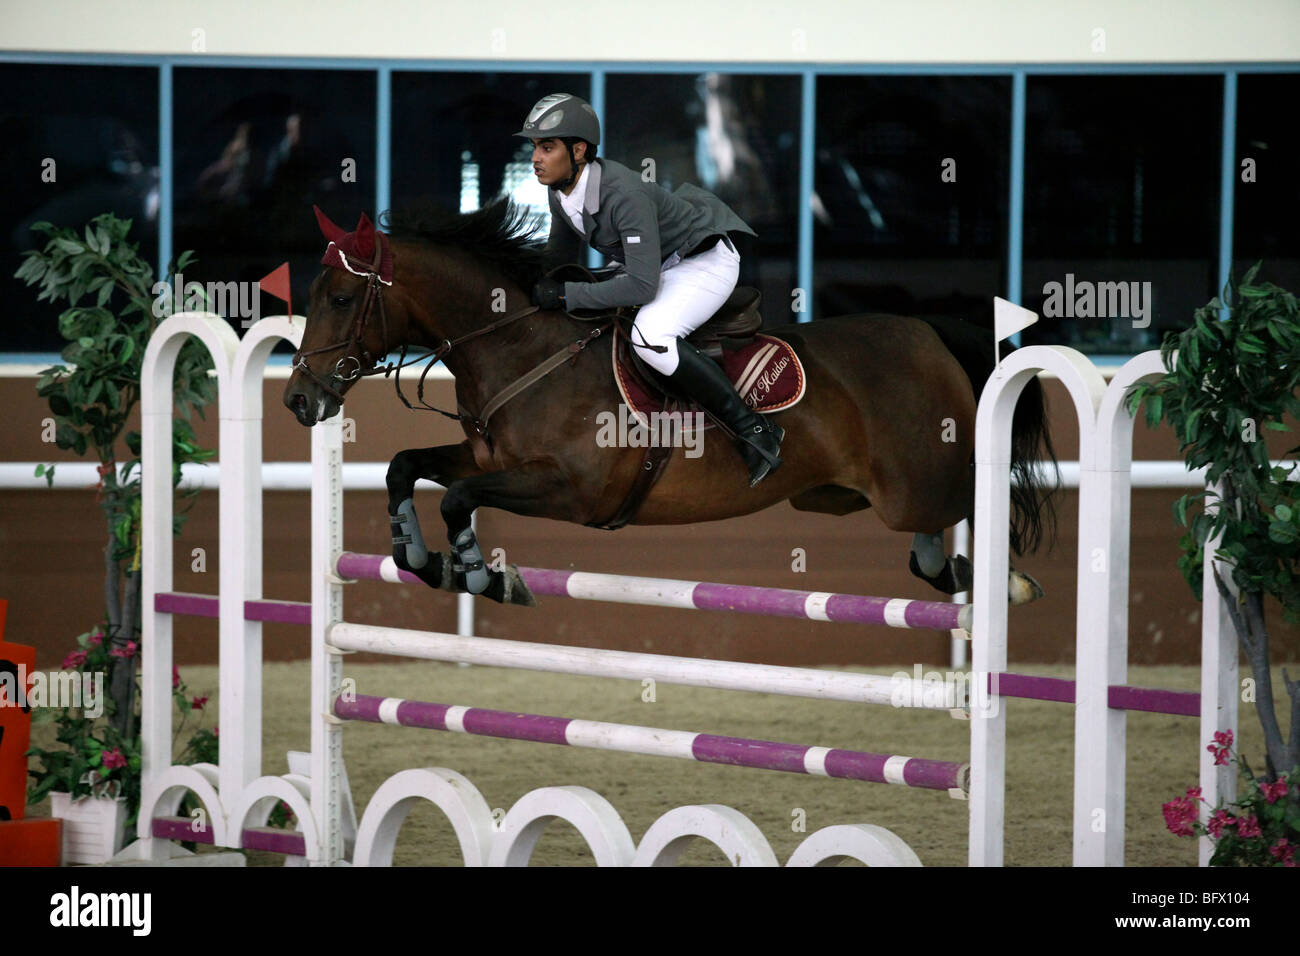 Qatari showjumper Al Haidan competing in a regional competition at the Qatar Equestrian Federation's indoor arena Stock Photo